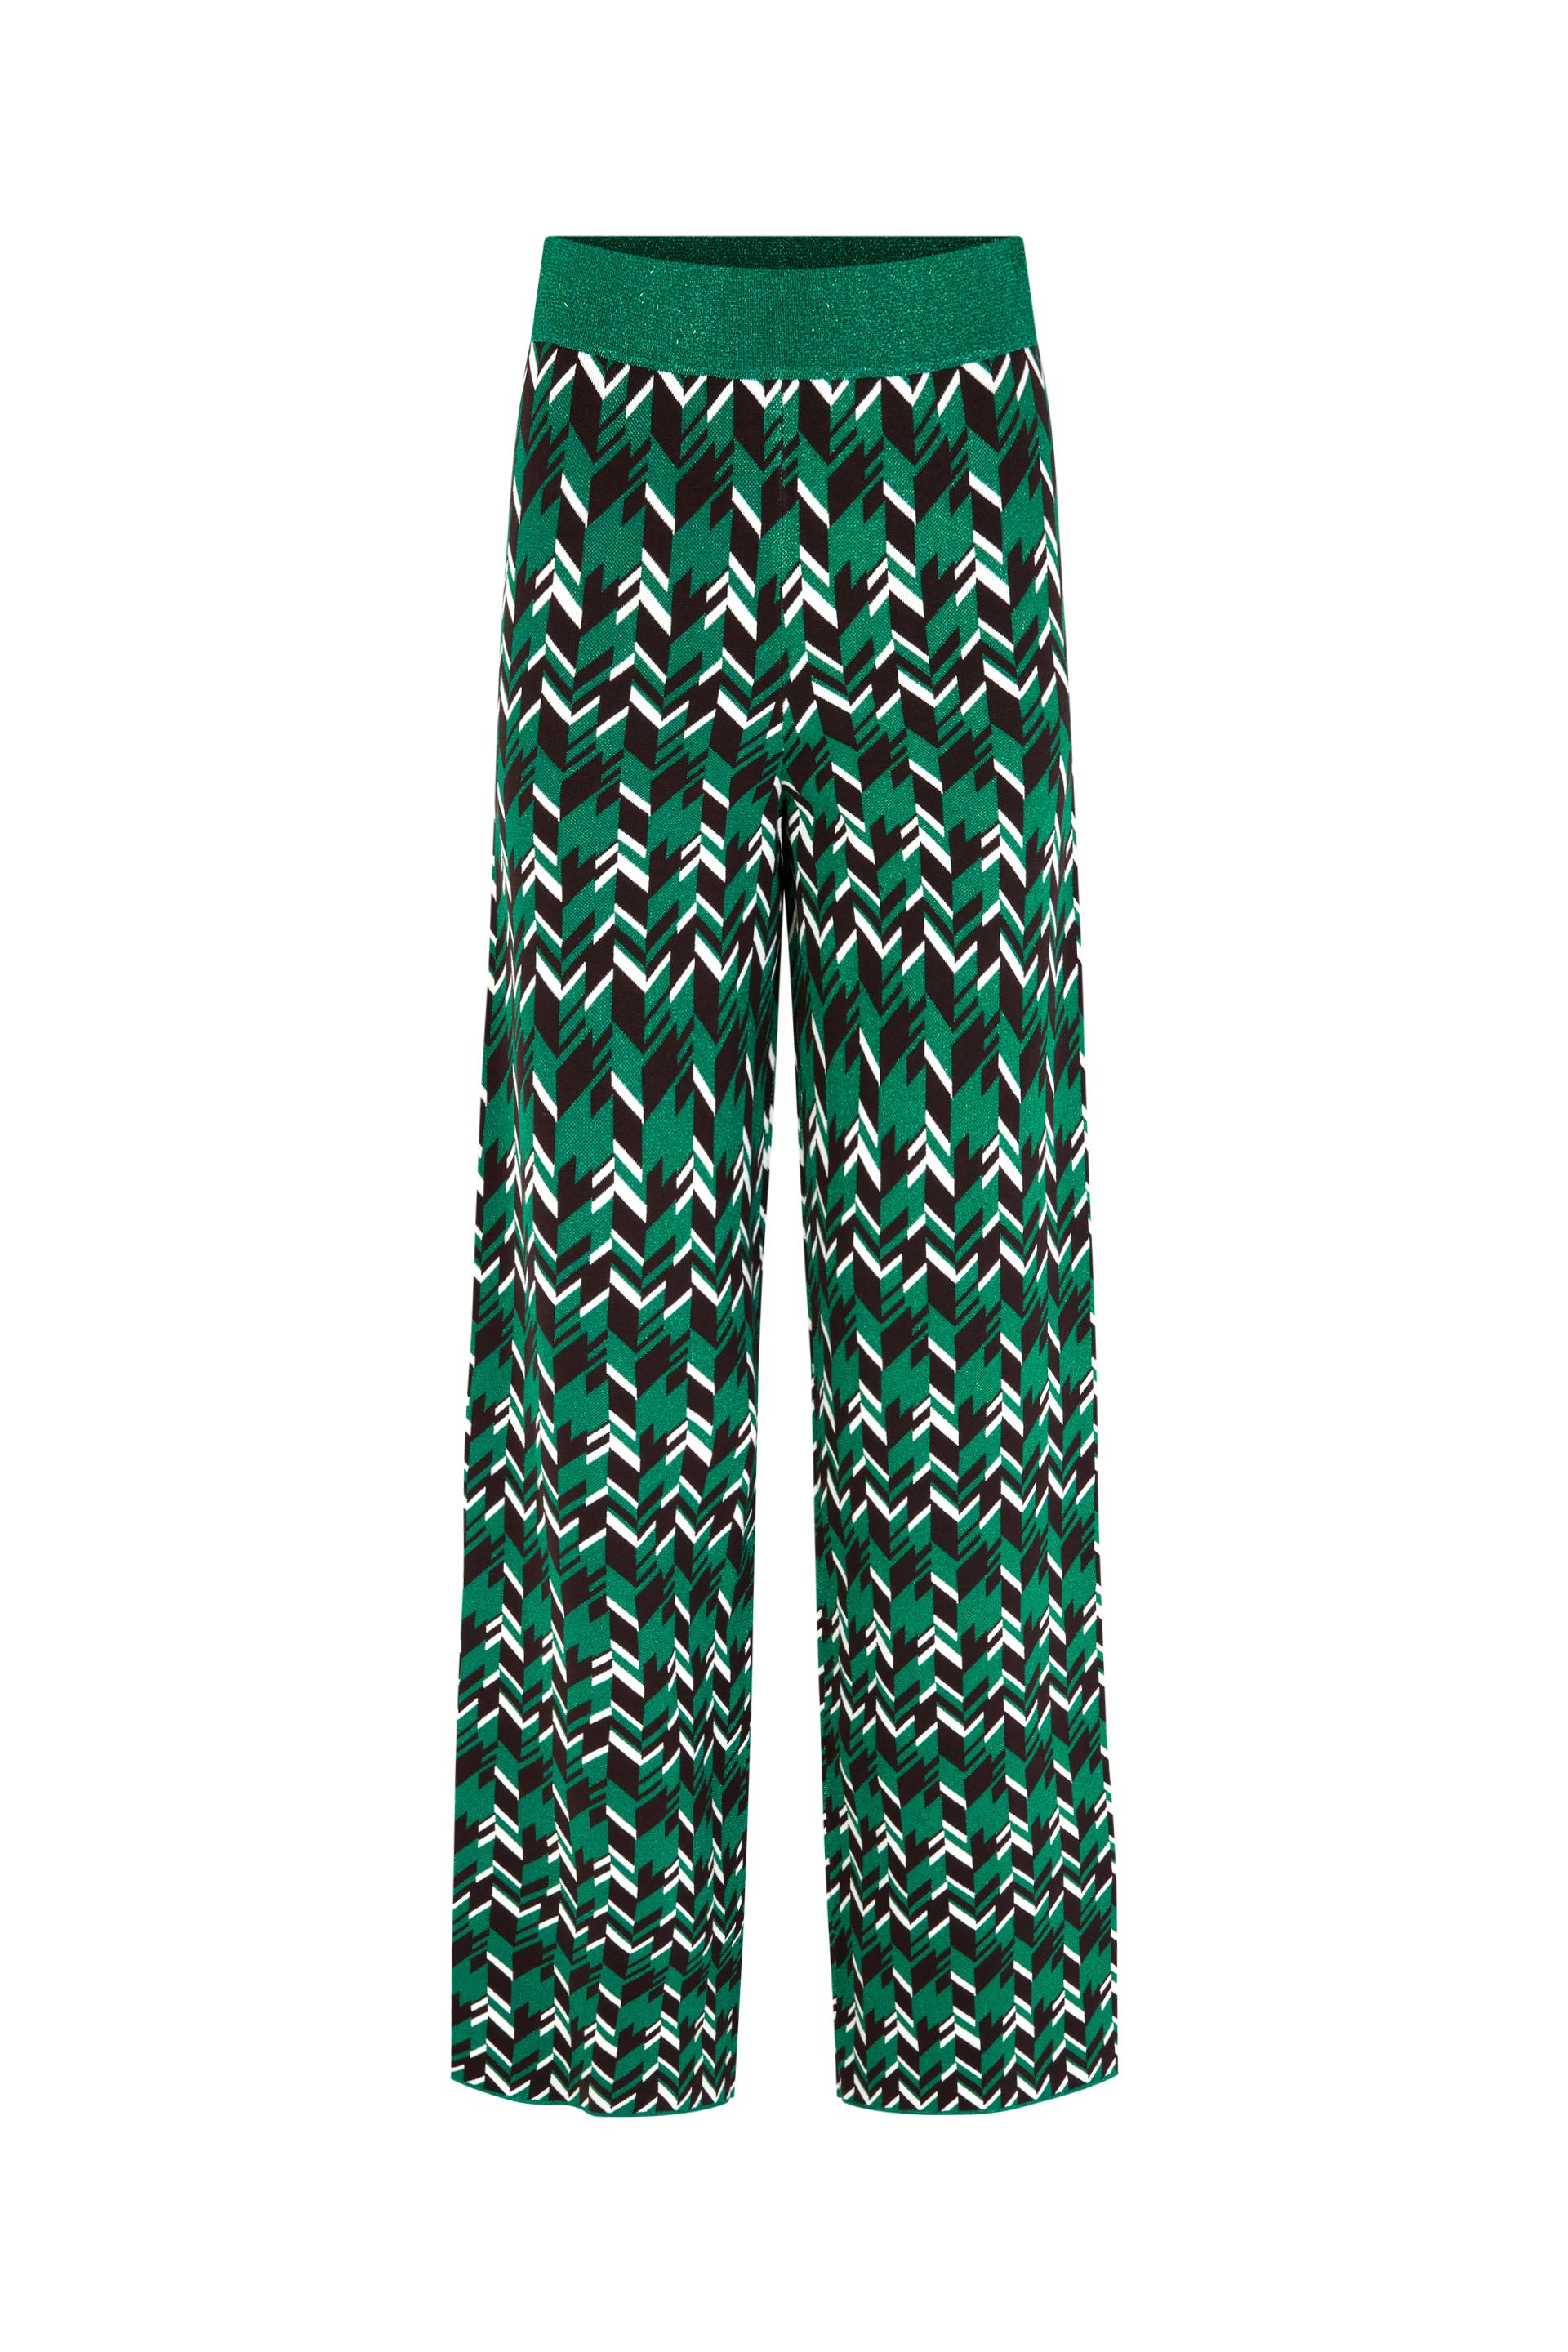 Cabery wide green geometric Pants